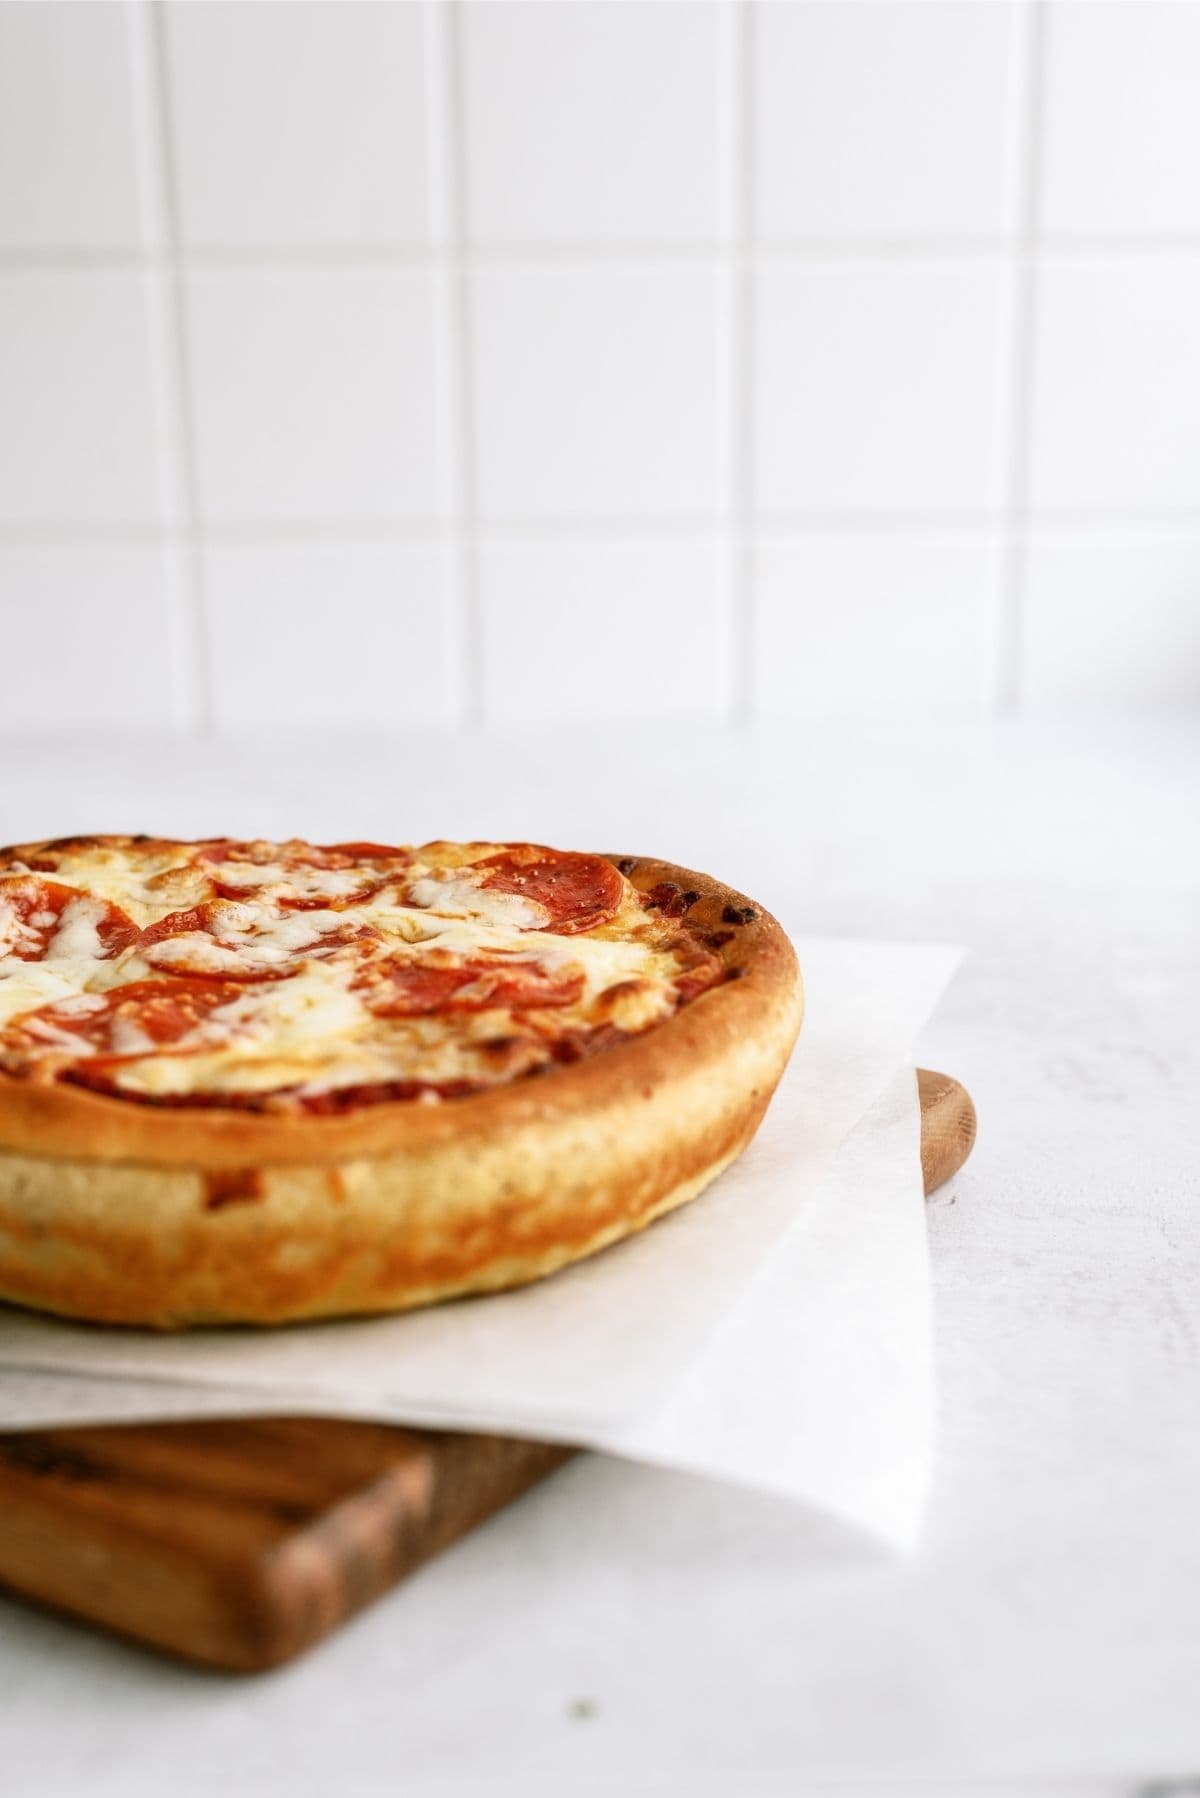 https://www.sixsistersstuff.com/wp-content/uploads/2022/01/Homemade-Pizza-Hut-Original-Deep-Dish-Pizza-2.jpg